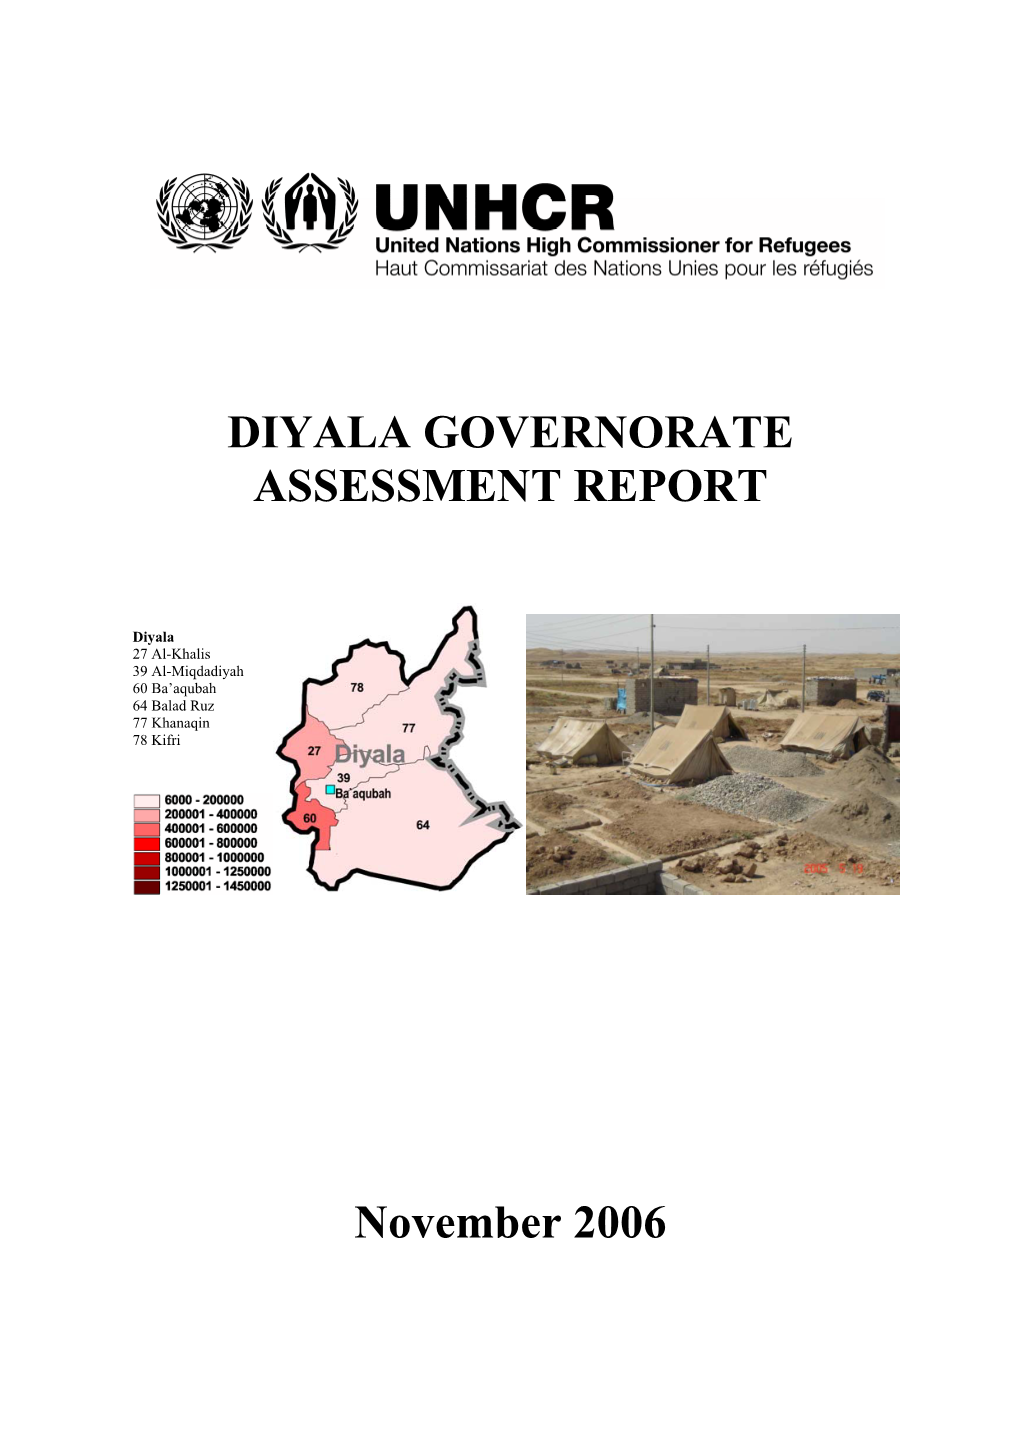 DIYALA GOVERNORATE ASSESSMENT REPORT November 2006